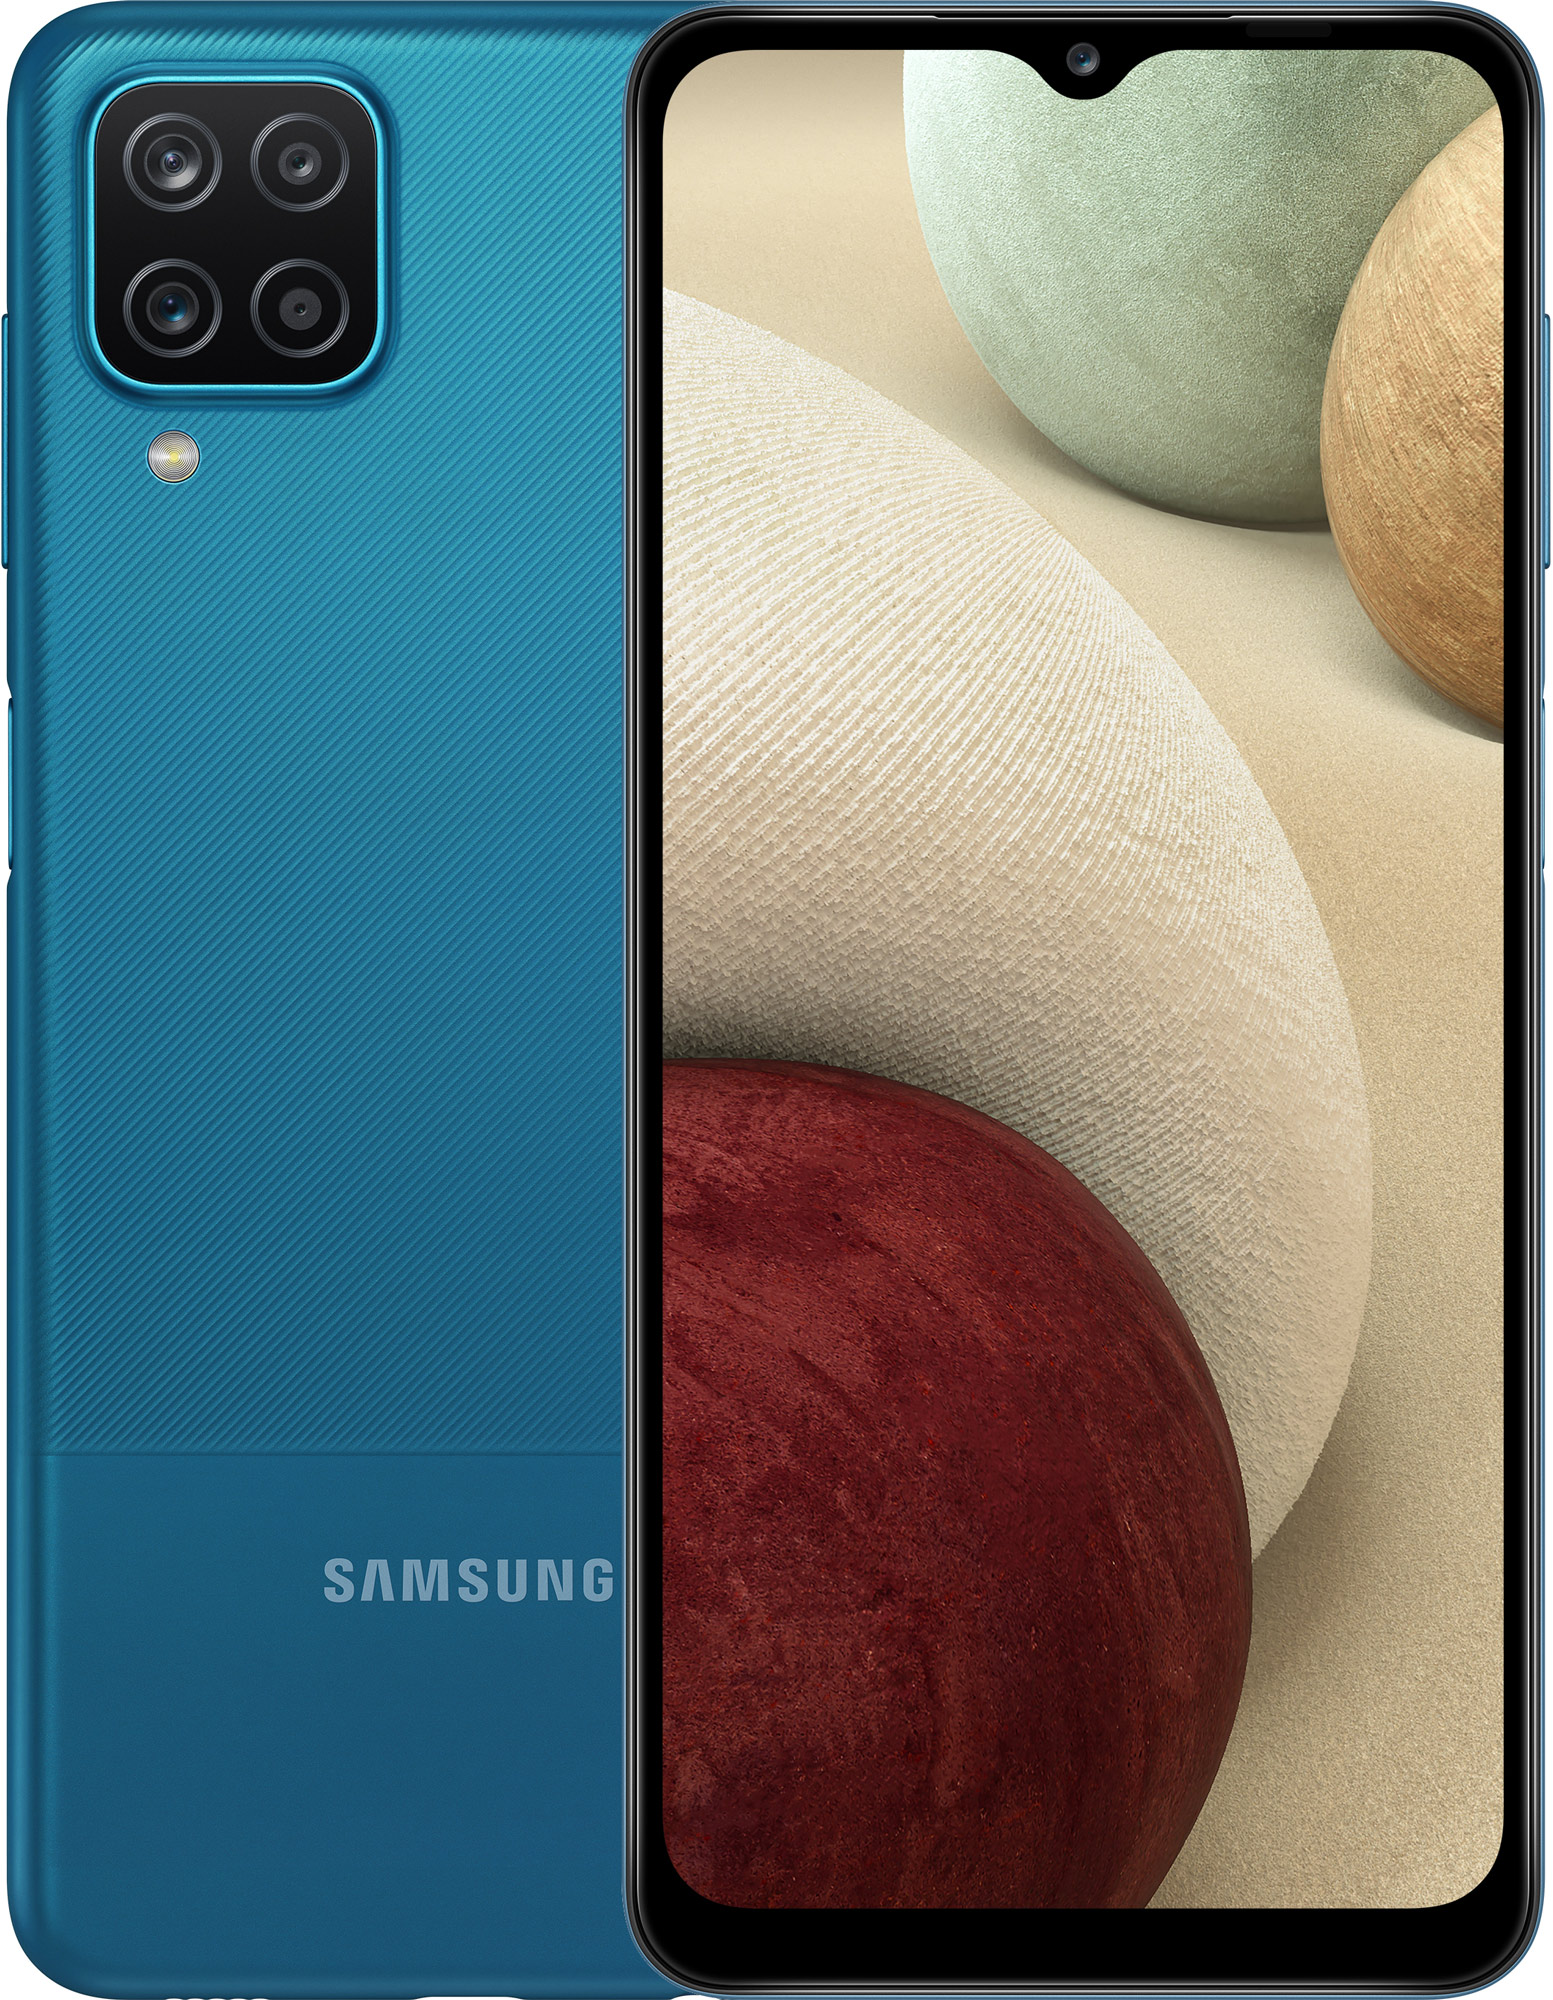 Смартфон SAMSUNG Galaxy A12 3/32GB Blue (SM-A127FZBUSEK) в Киеве